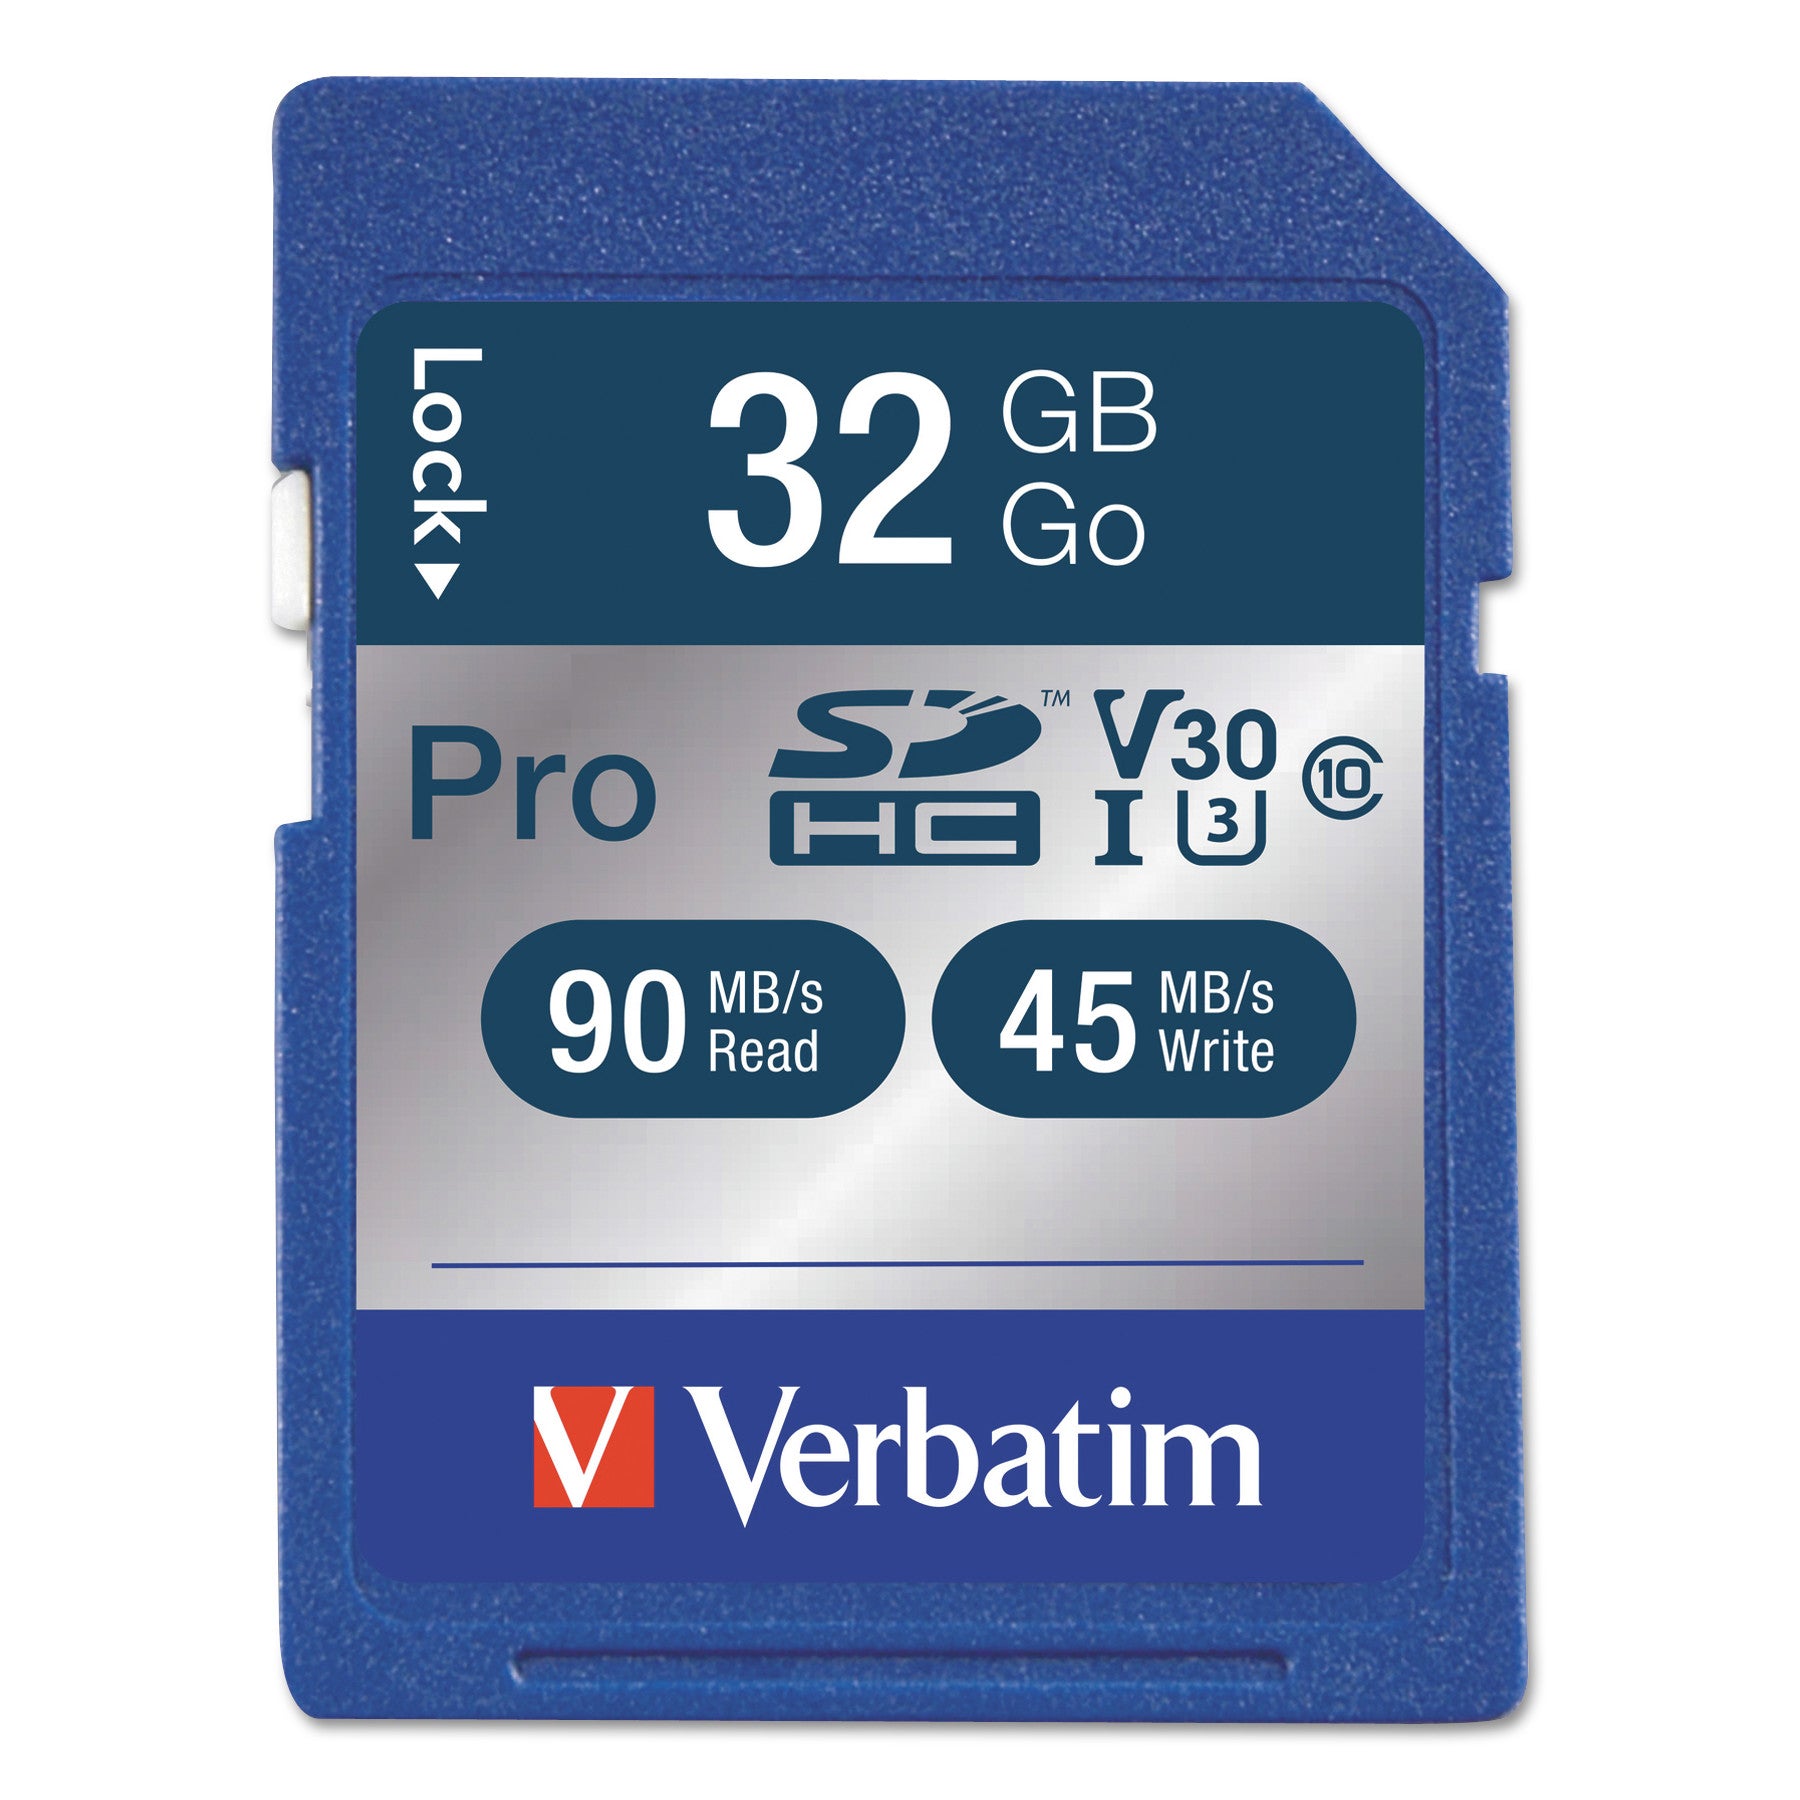 32GB Pro 600X SDHC Memory Card, UHS-I V30 U3 Class 10 - 